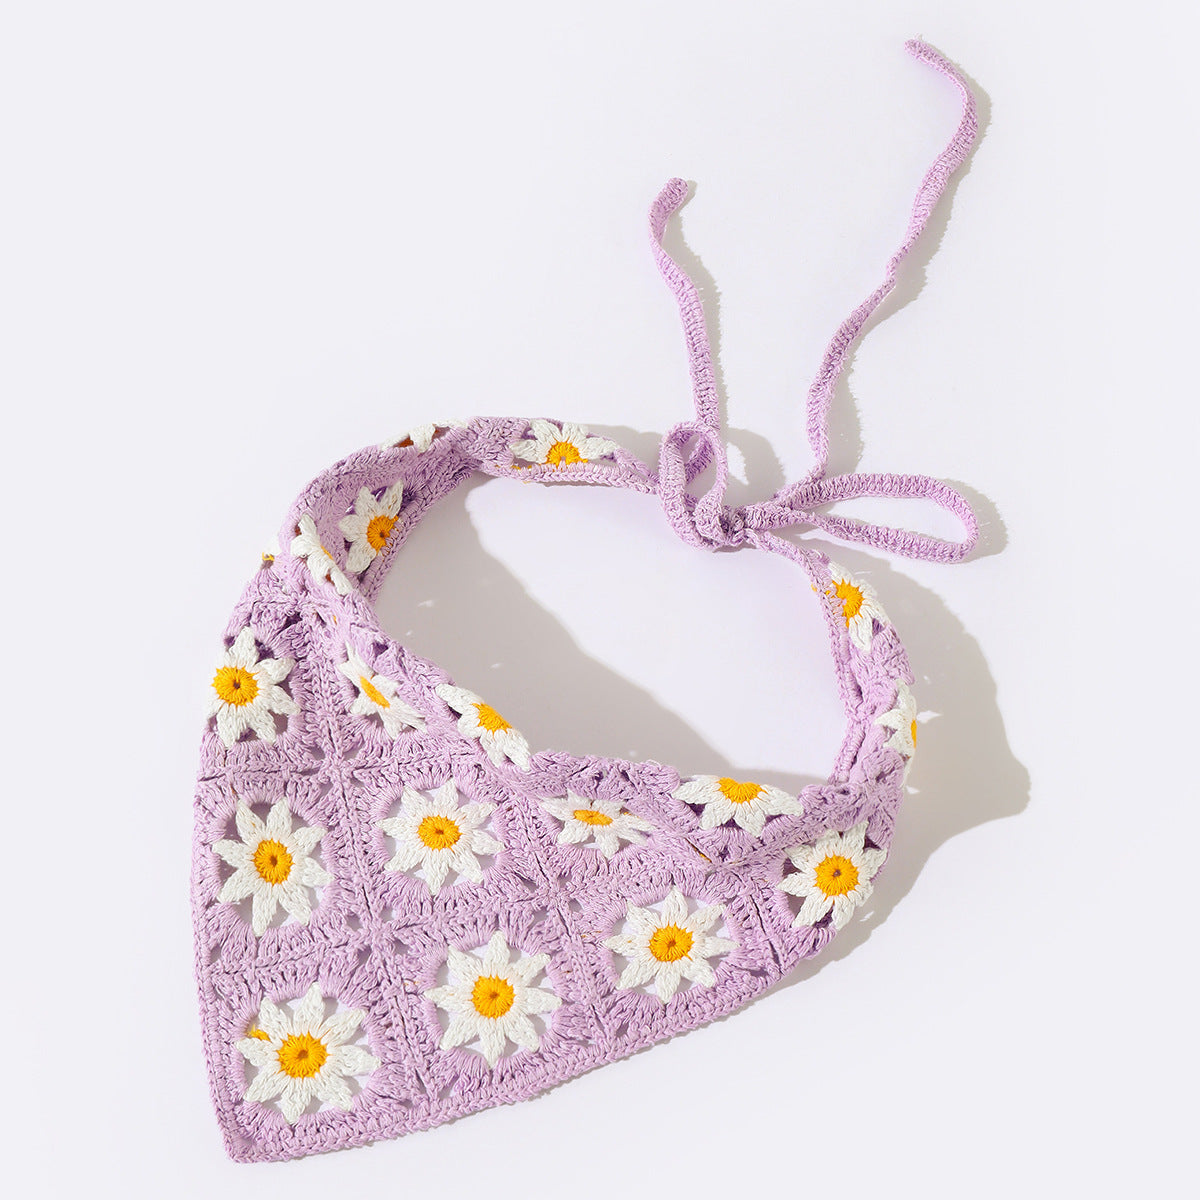 daisy head scarf with yellow